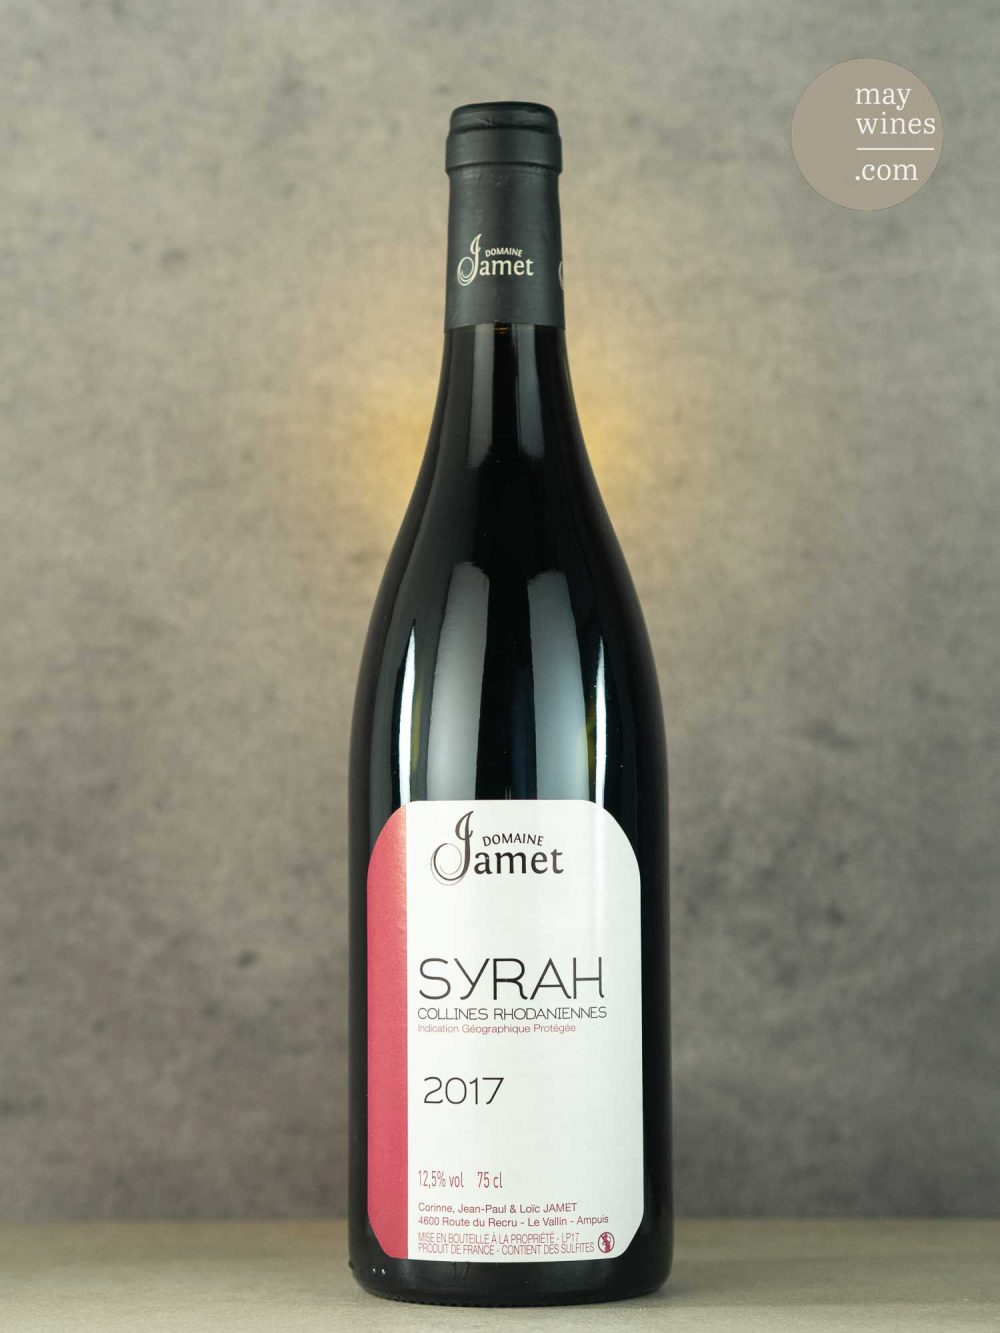 May Wines – Rotwein – 2017 Collines Rhodaniennes IGP Syrah - Domaine Jamet